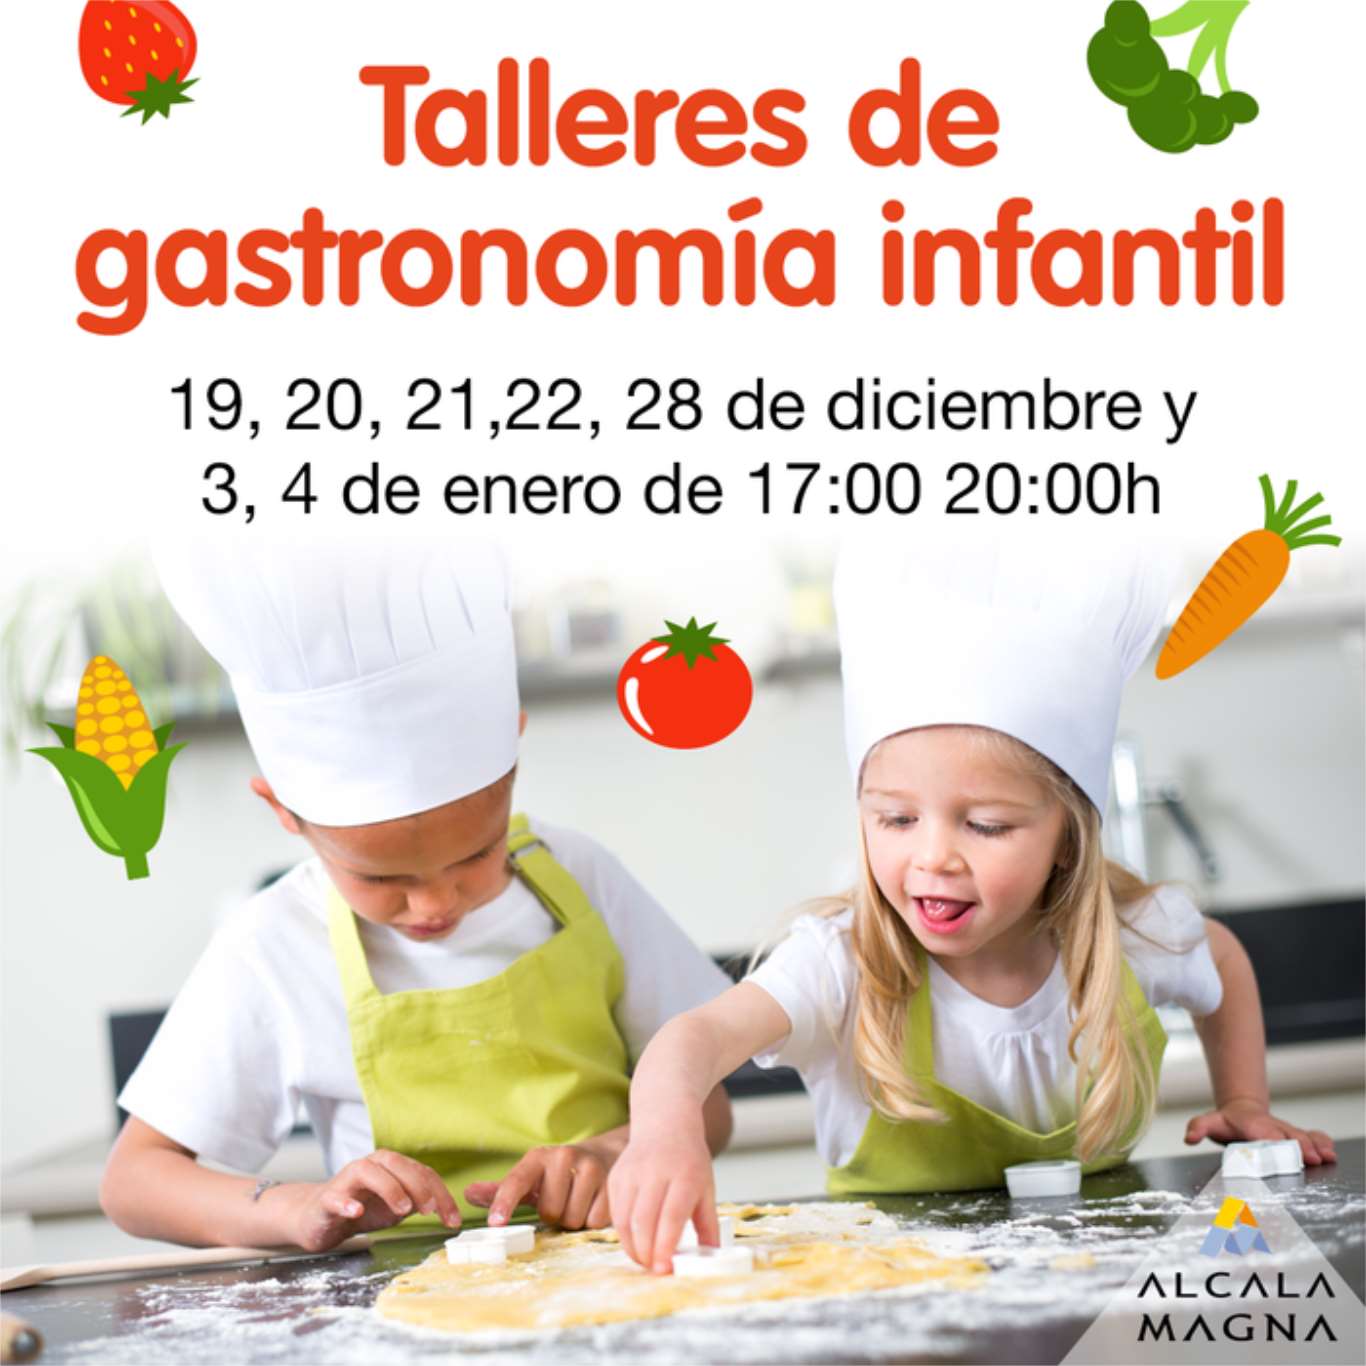 Talleres de Gastronomía infantil 2015